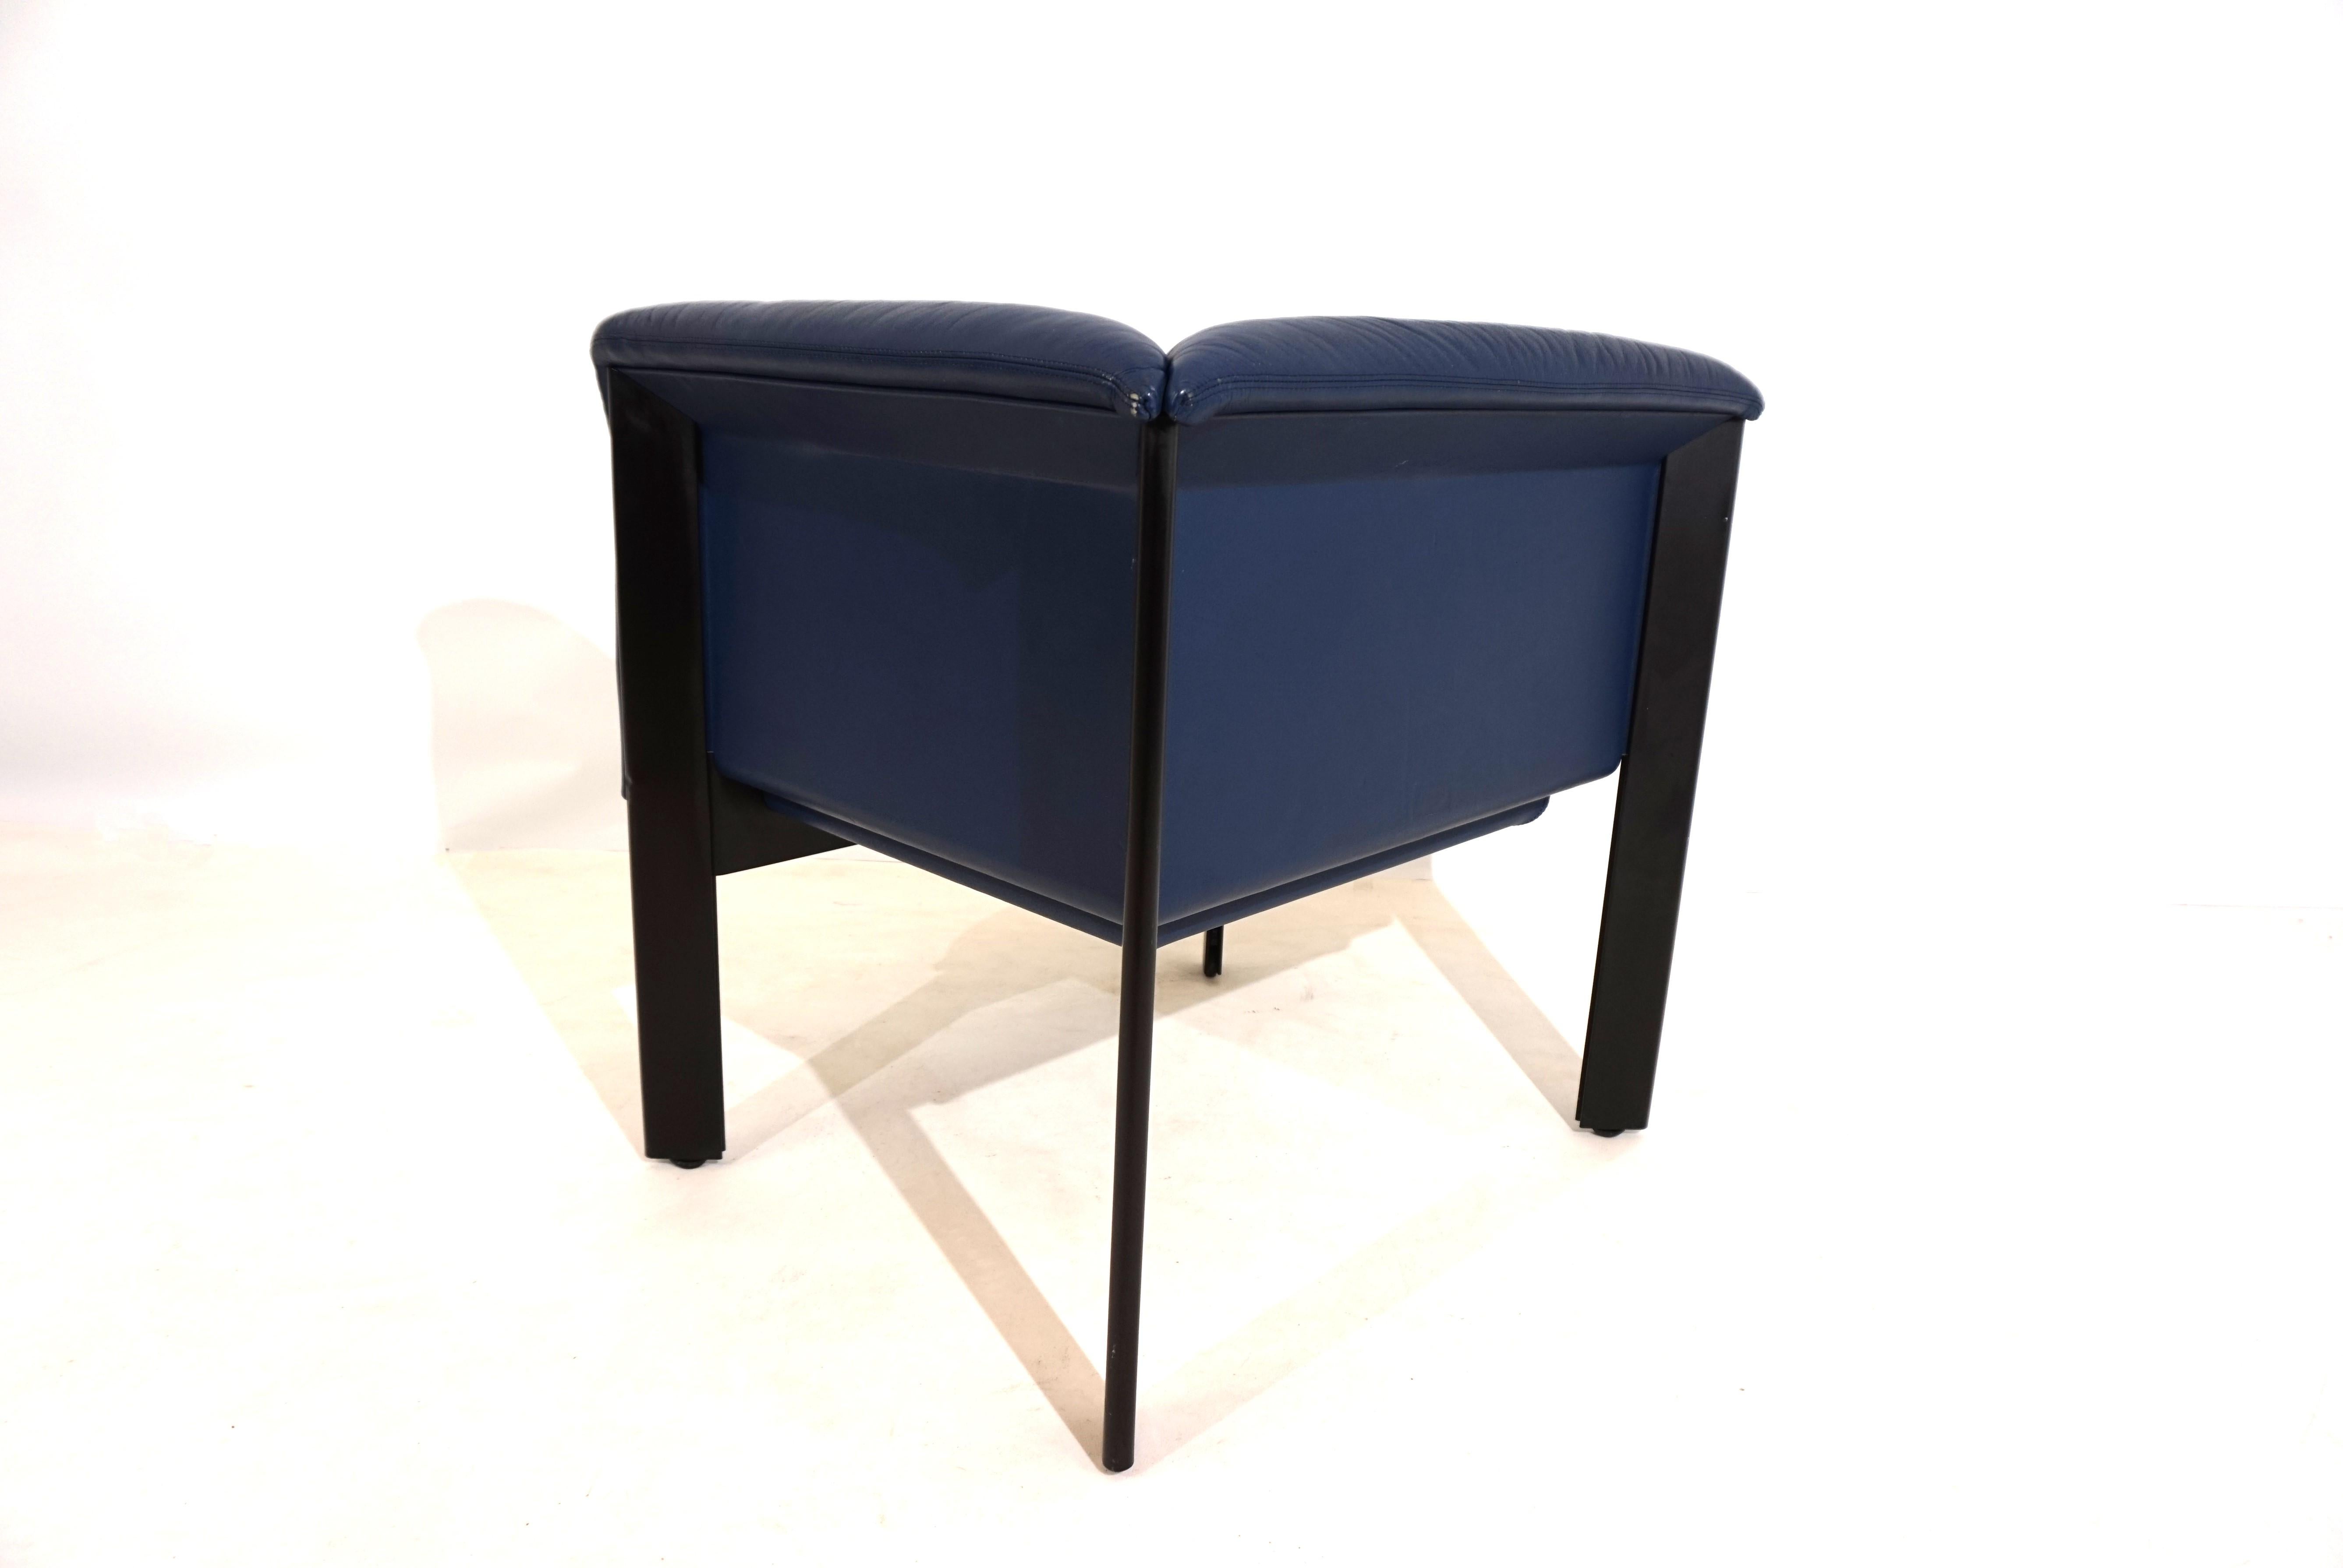 Poltrona Frau Interlude leather armchair by Marco Zanuso For Sale 12